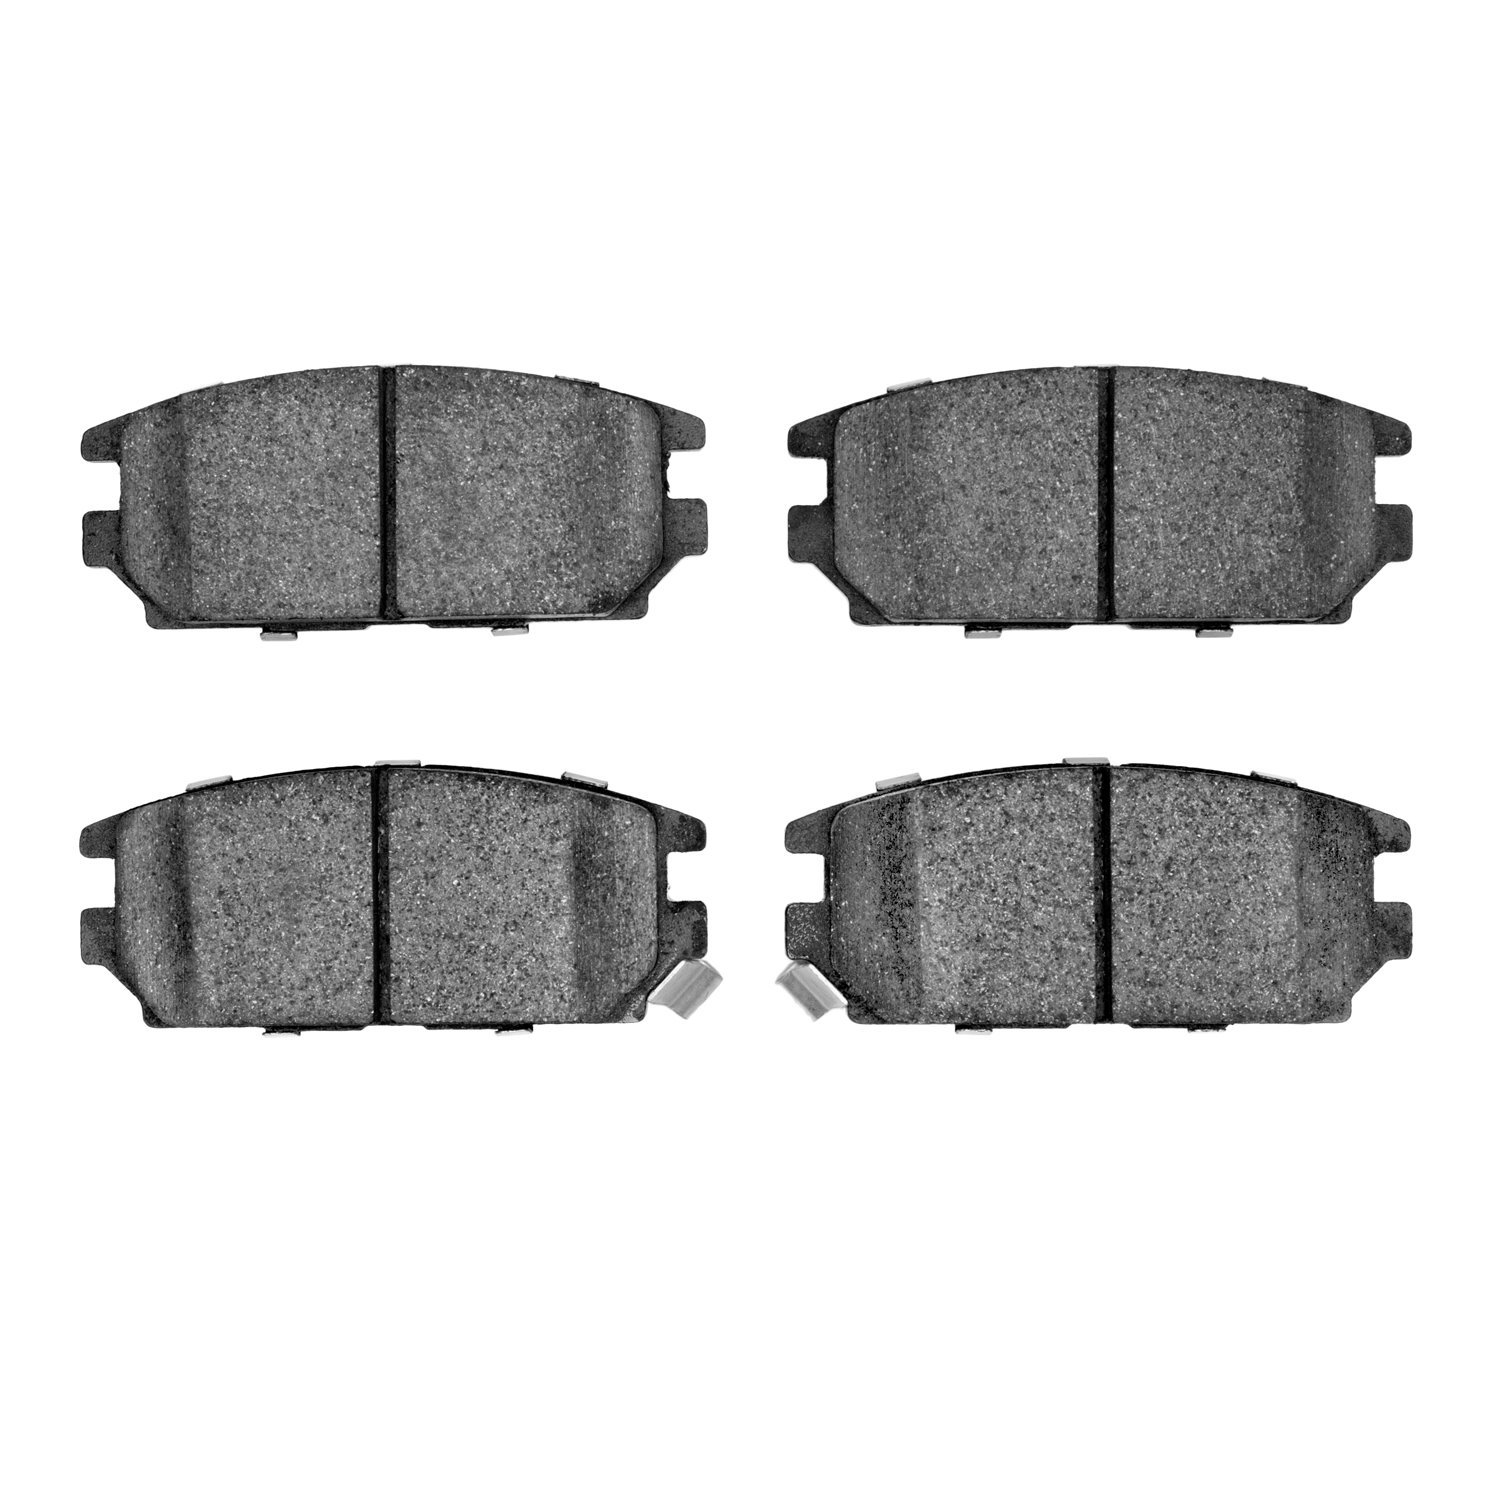 Ceramic Brake Pads, 1991-2012 Fits Multiple Makes/Models, Position: Rear